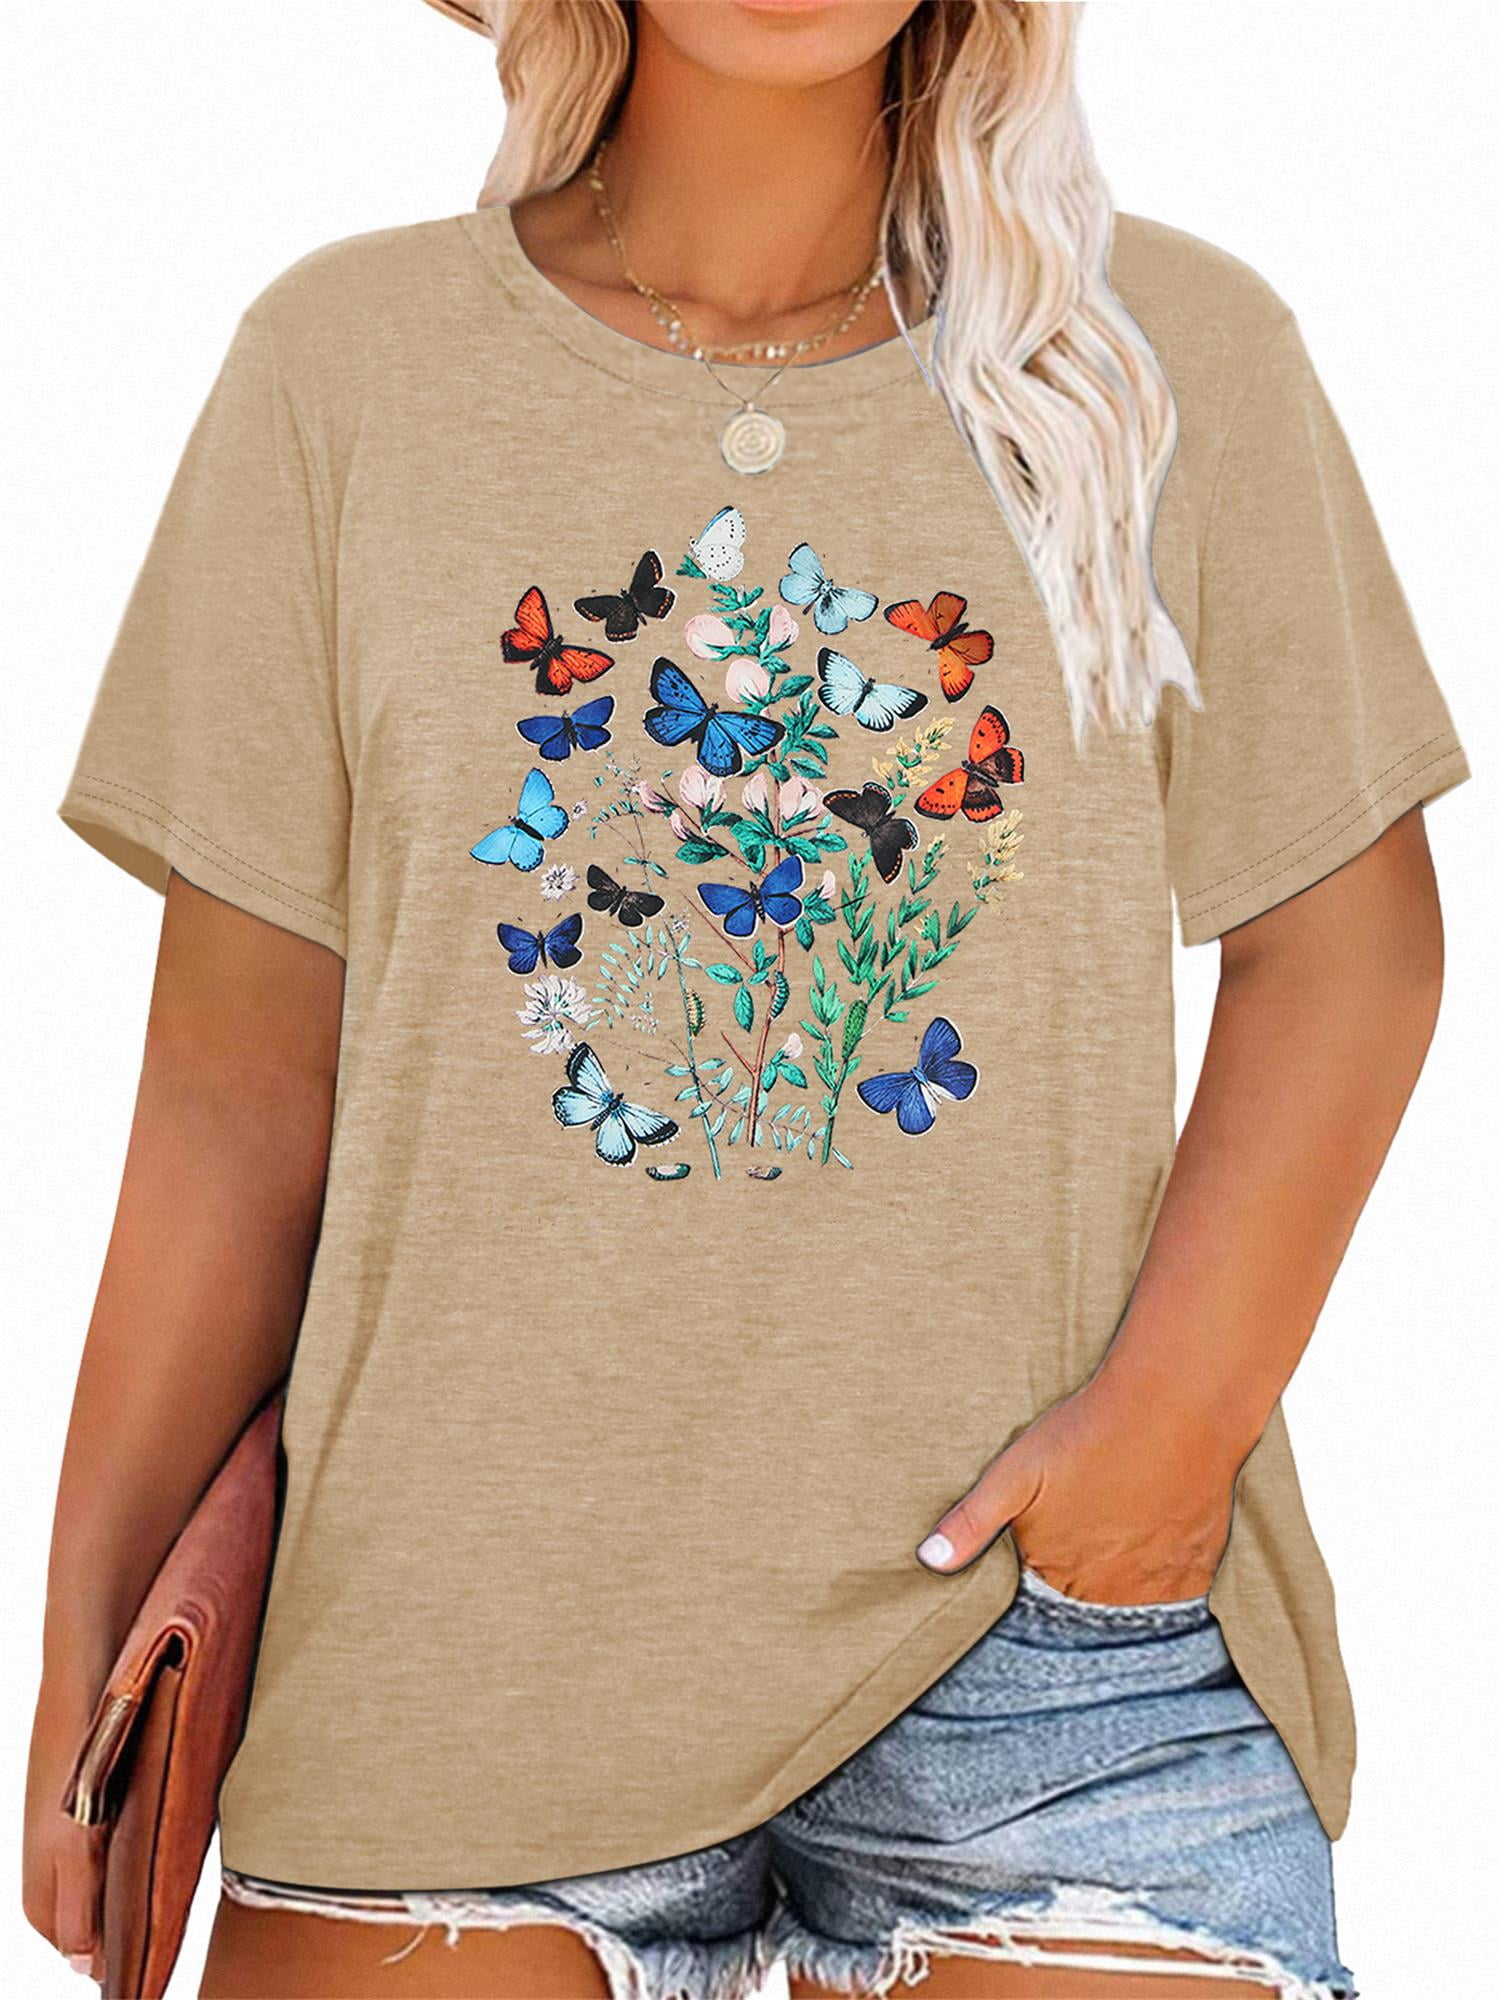 Anbech Plus Size Butterfly Women Shirt Graphic Flower T-Shirts Casual ...